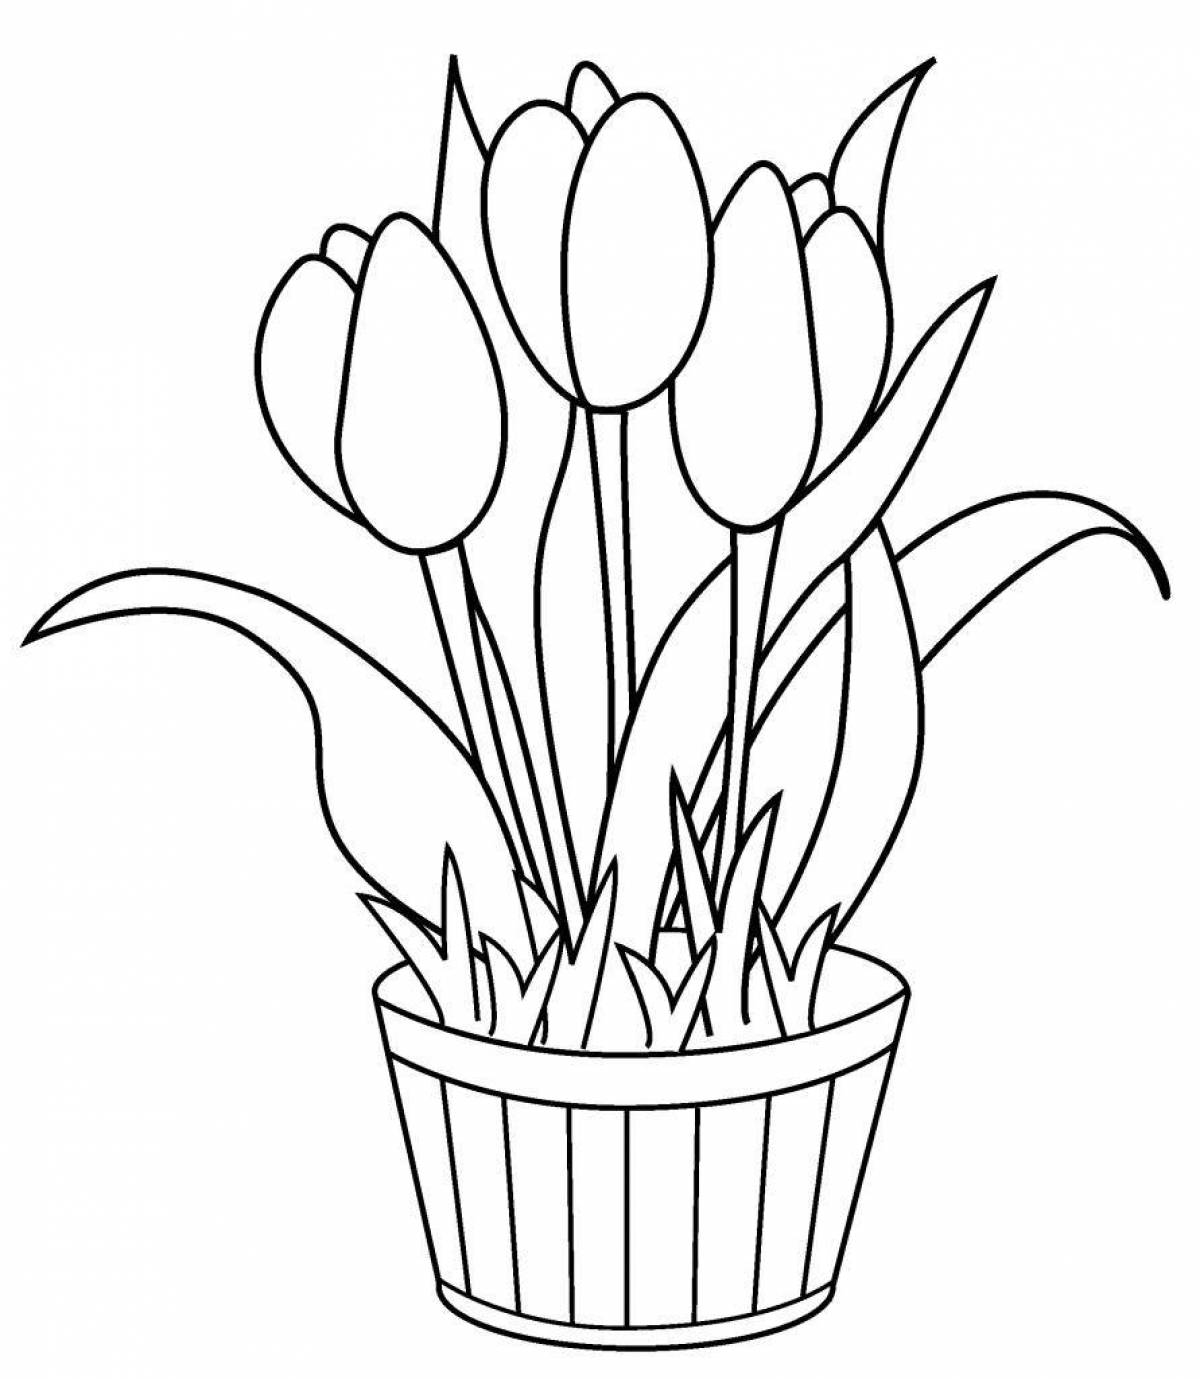 Spring tulips #3